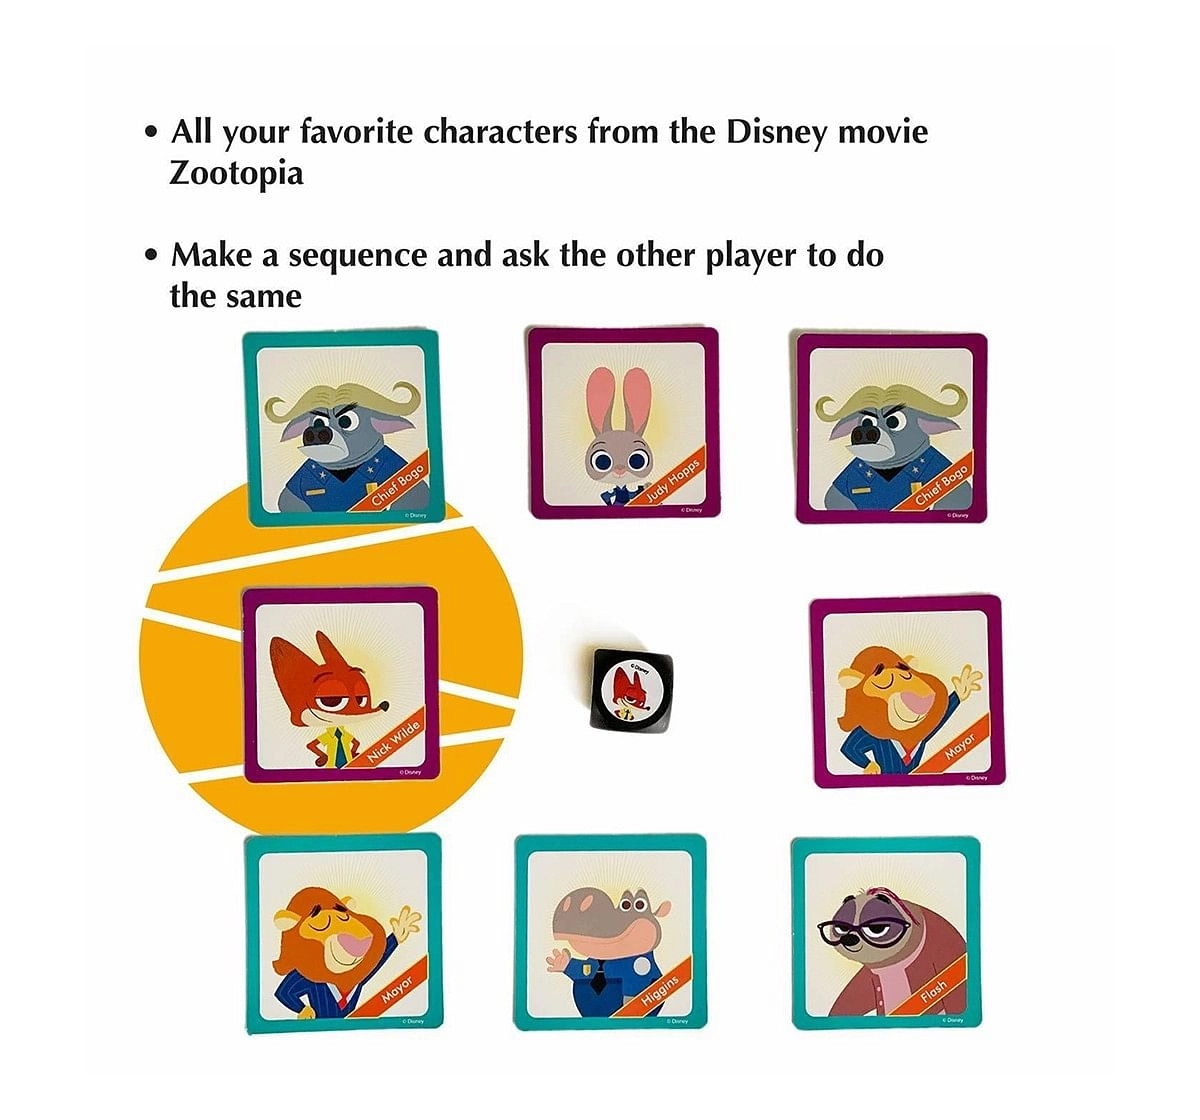 Kaadoo Disney Jodi Joy Zootopia Card Game for Kids age 3Y+ 